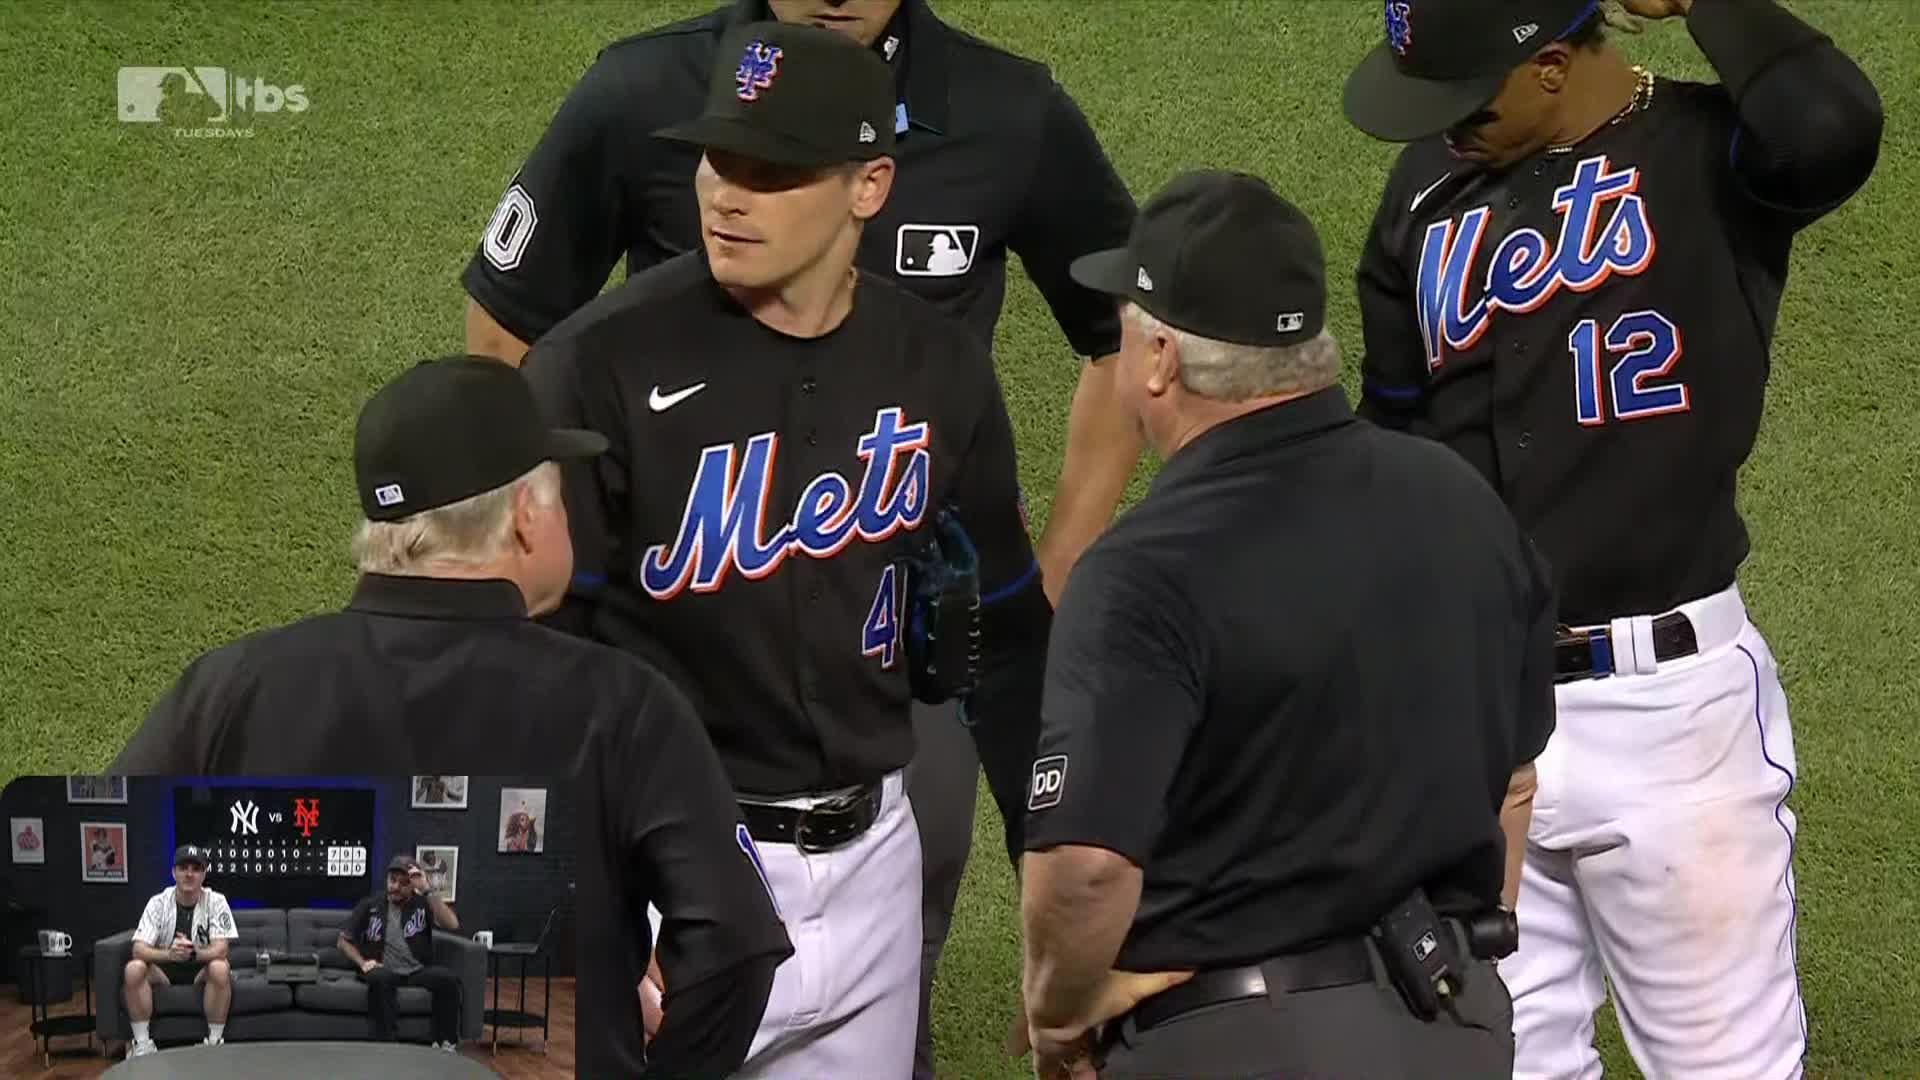 SNY Mets on X: The Mets will wear their black jerseys tonight